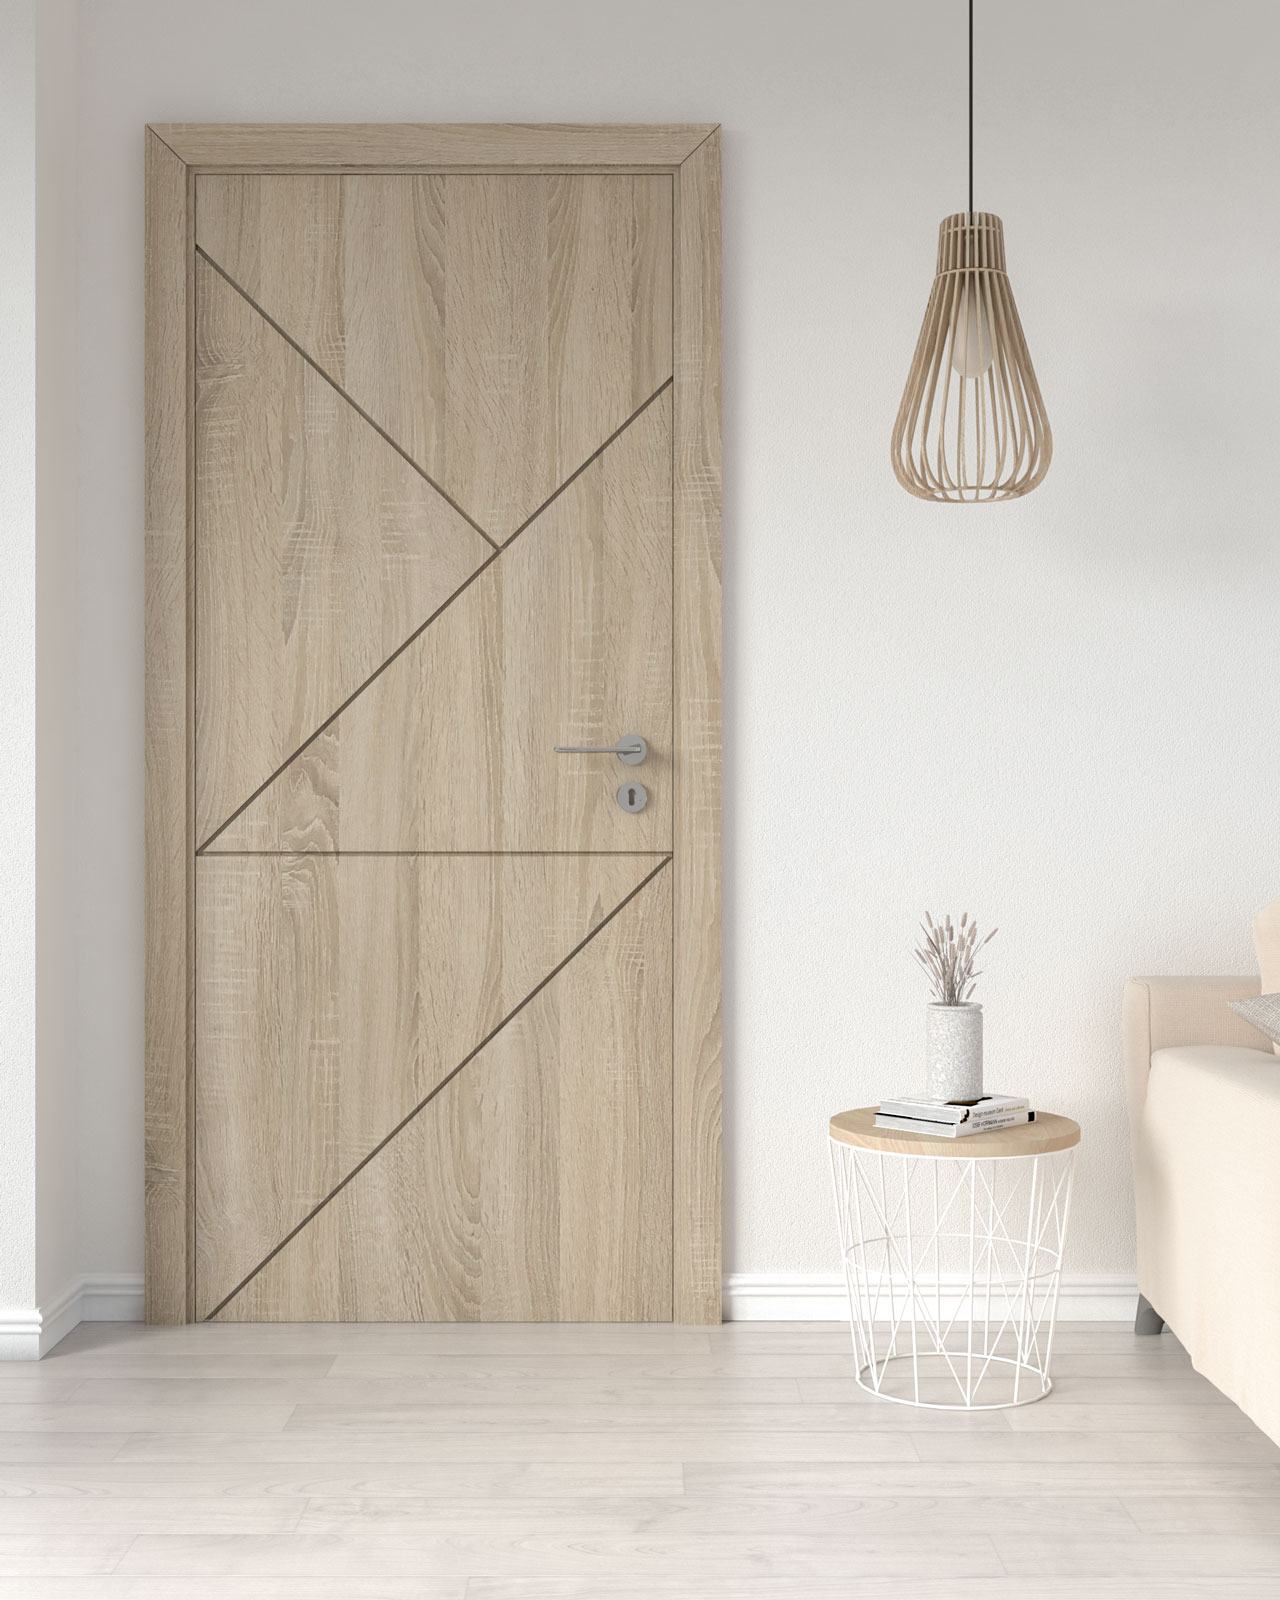 Geometric design on light colored wood door